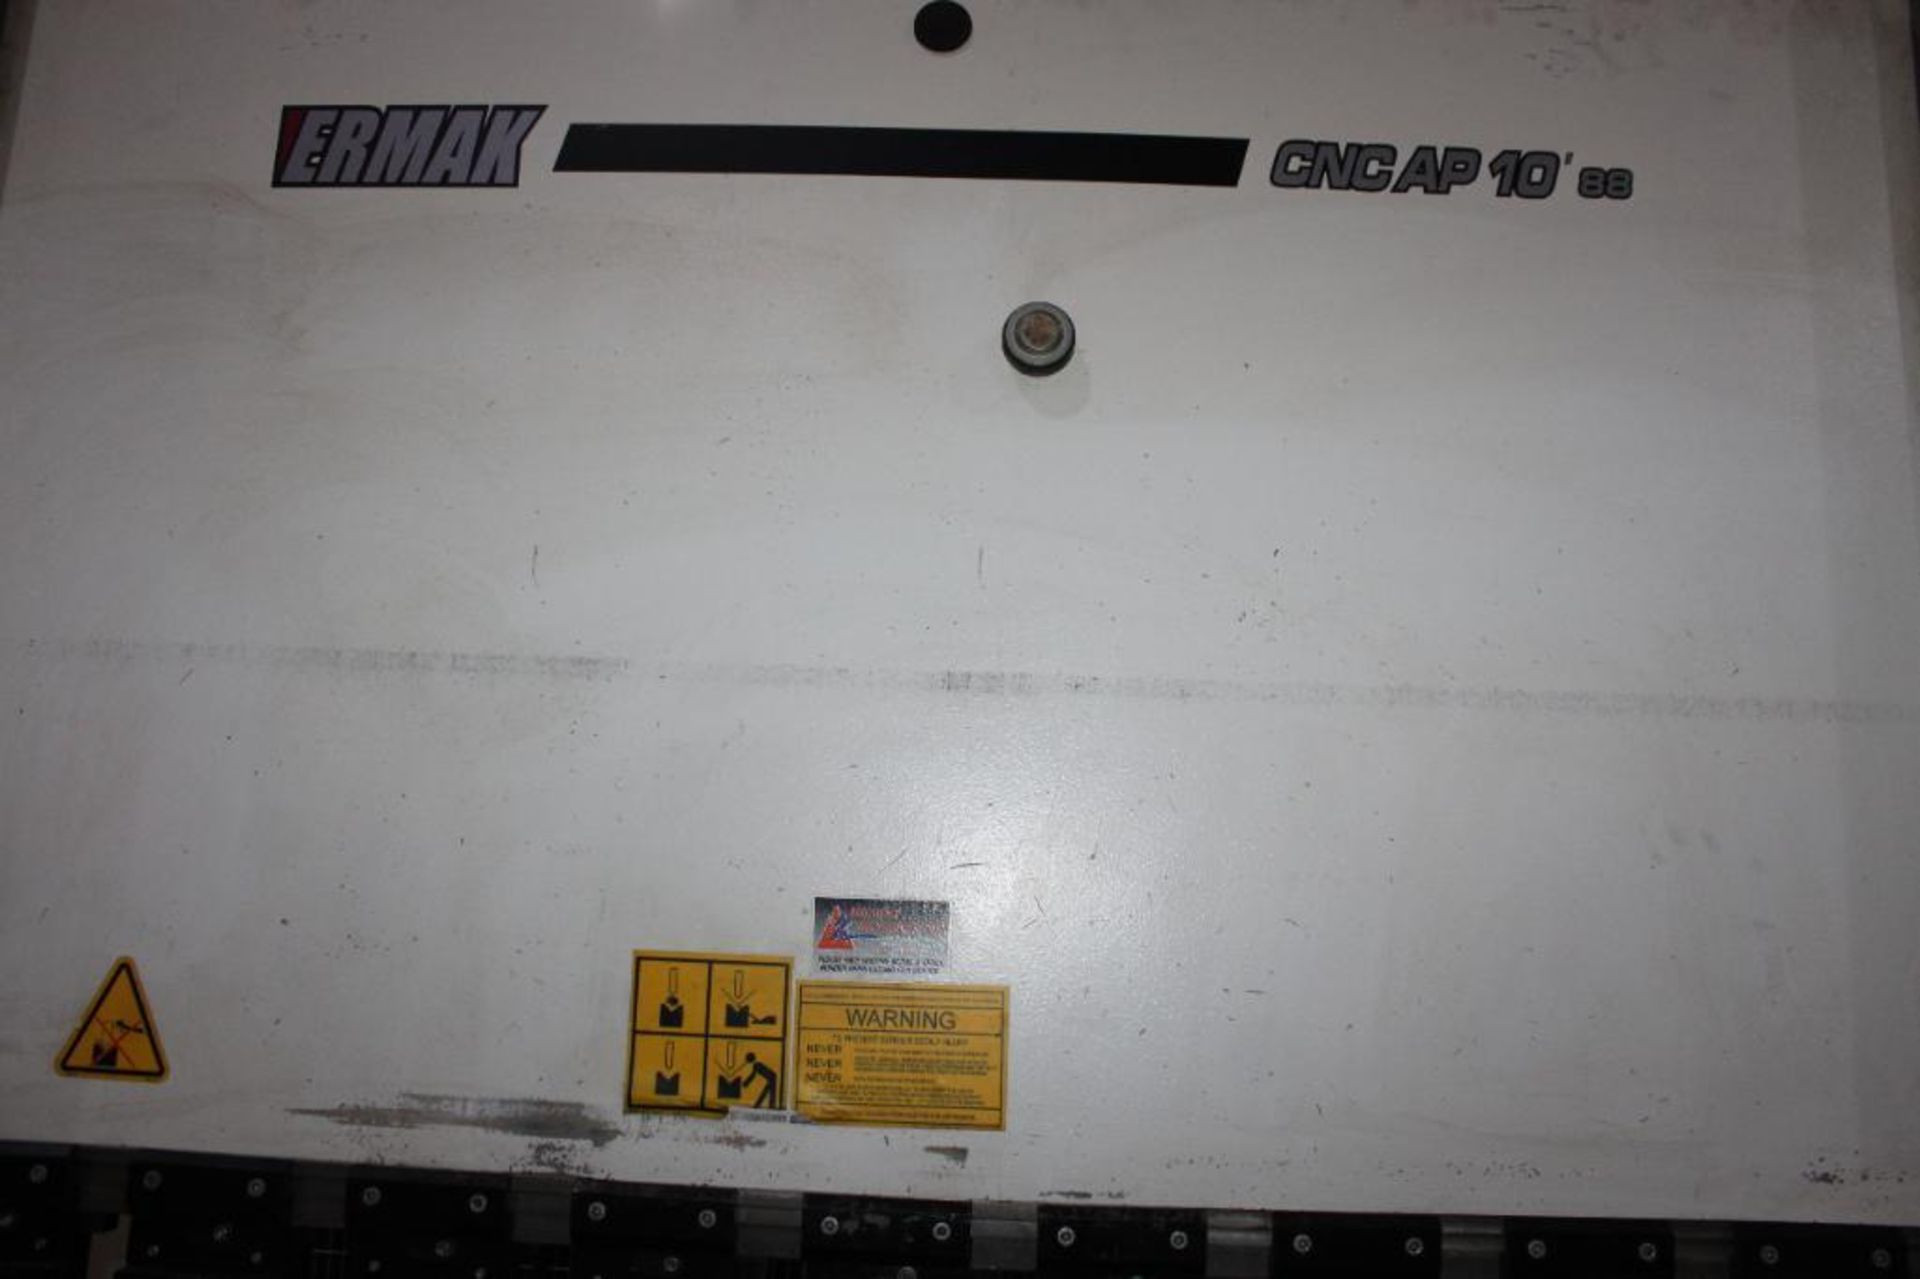 Ermak CNC Press Brake Machine AP 10' 88 W/ DelemDA-GGW Model 2006 - Needs Light Curtain - Image 3 of 16